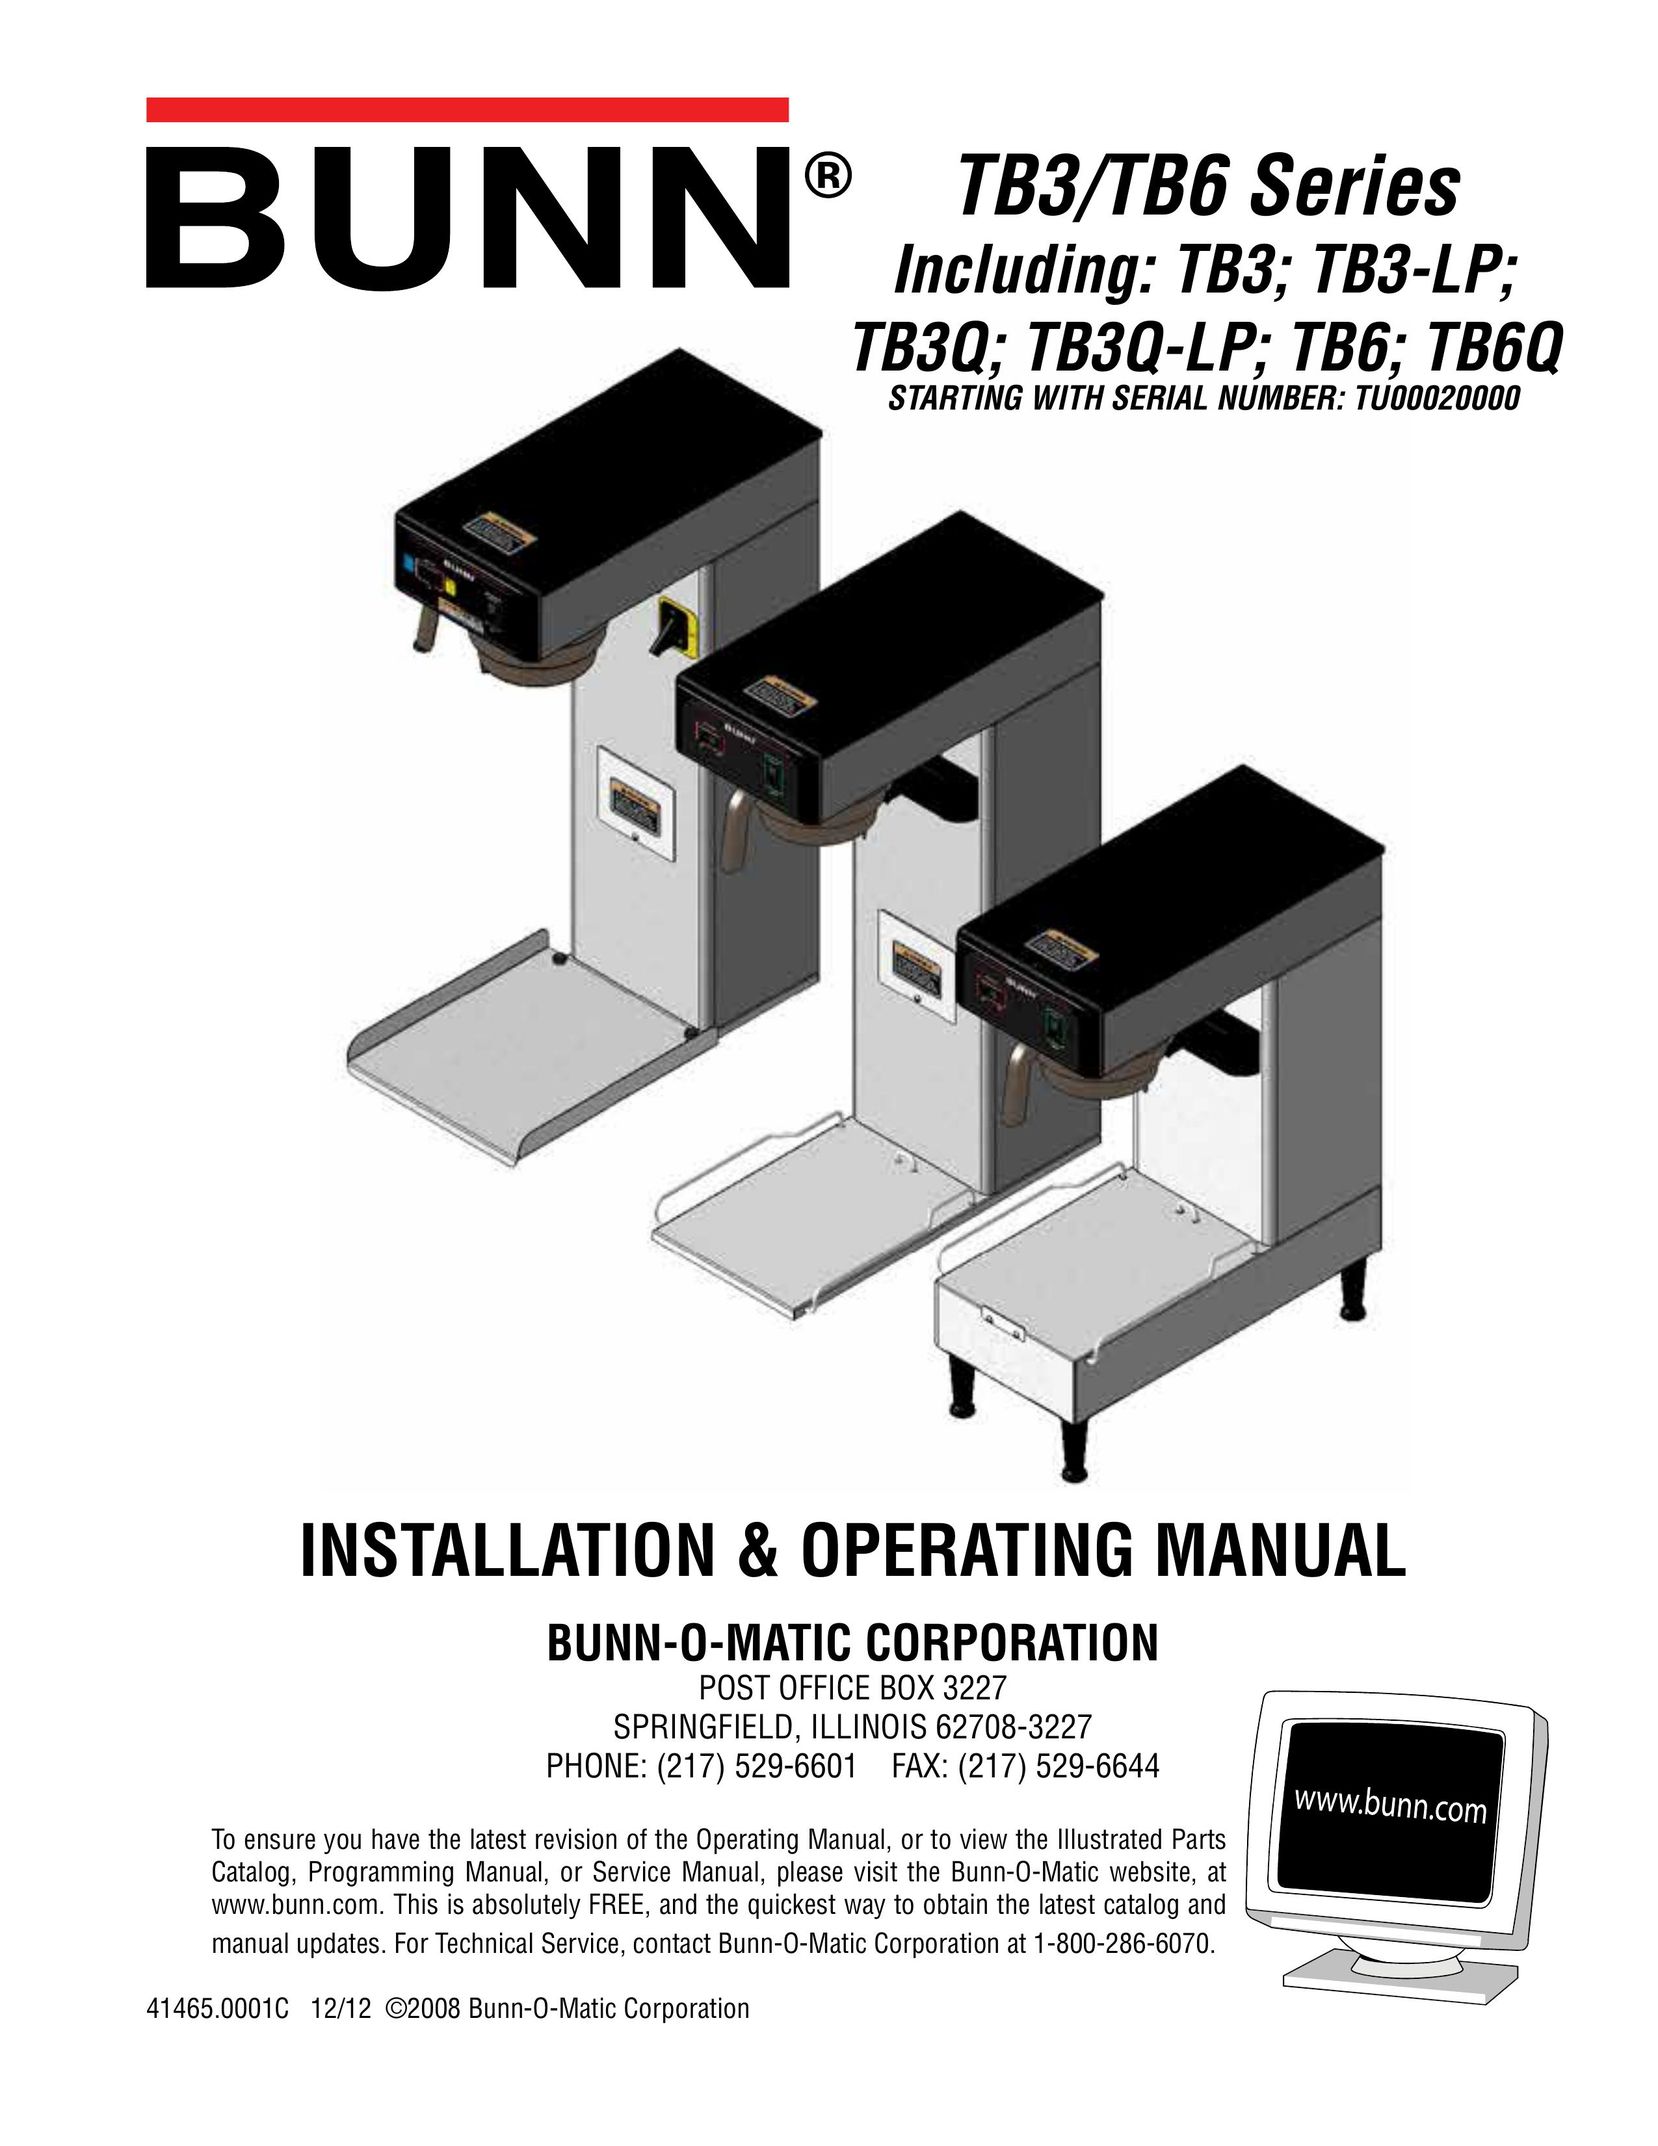 Bunn TB3Q-LP Hot Beverage Maker User Manual